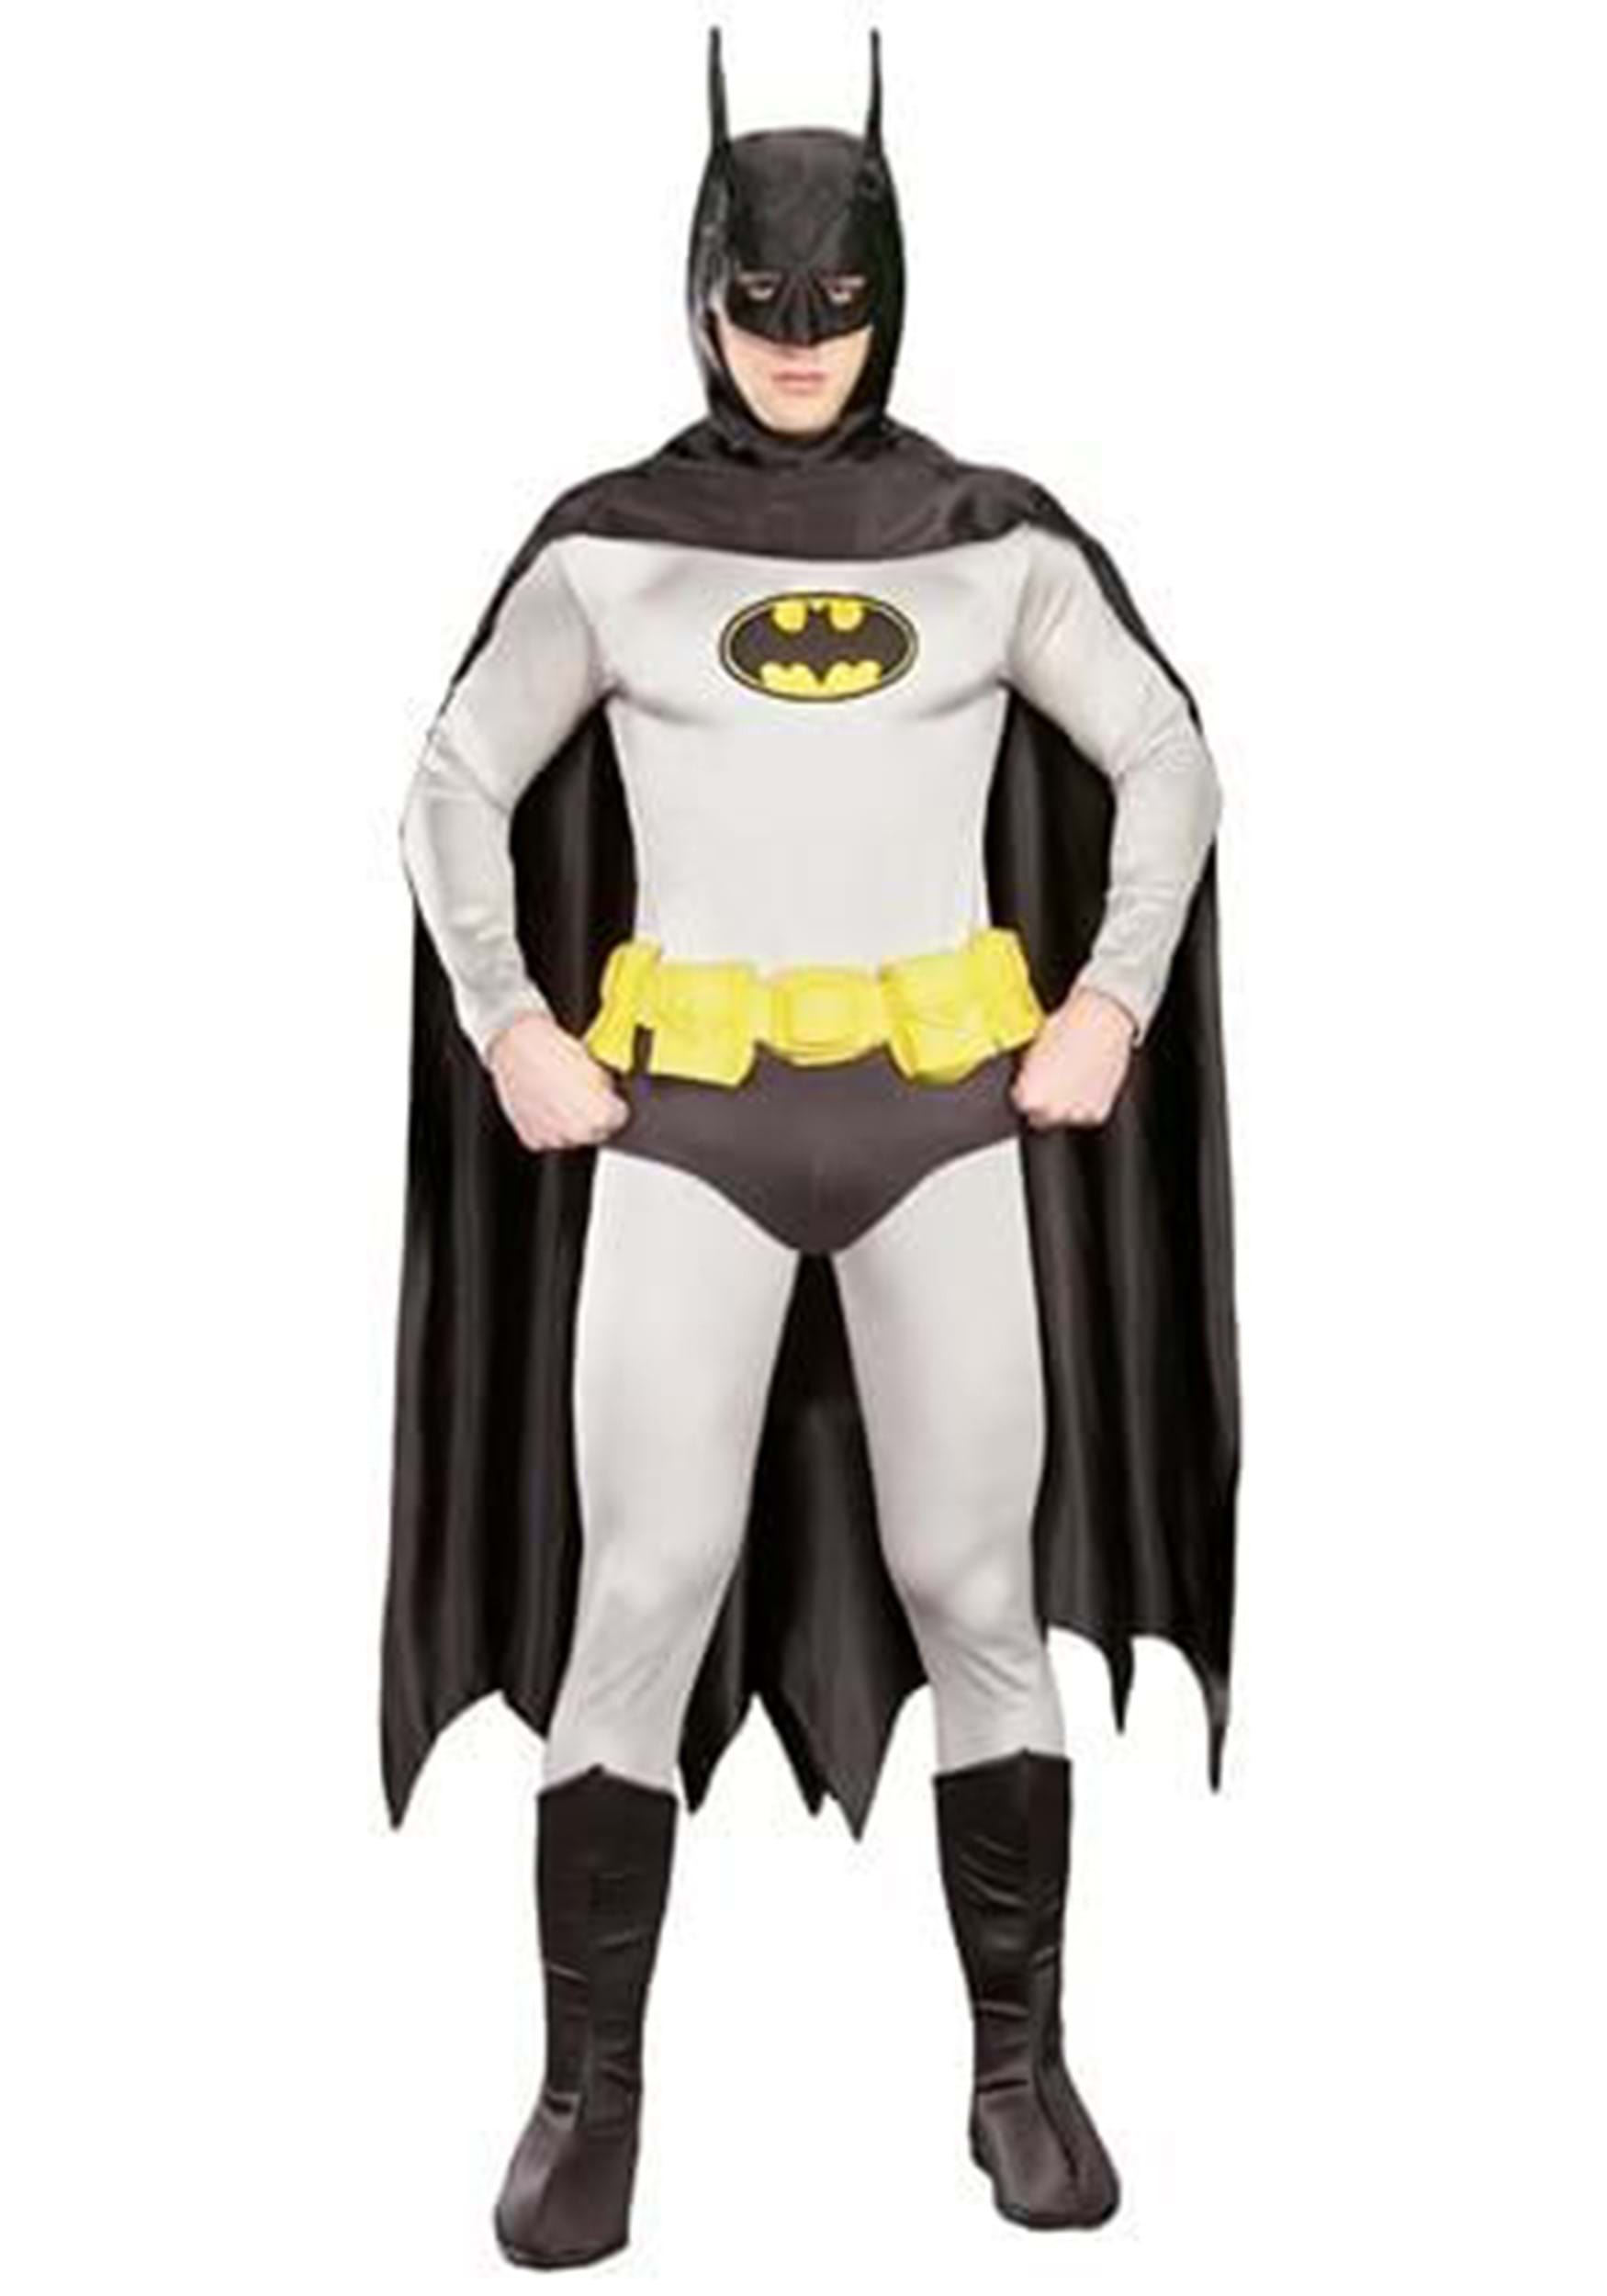 Authentic Classic Batman Costume for Adults